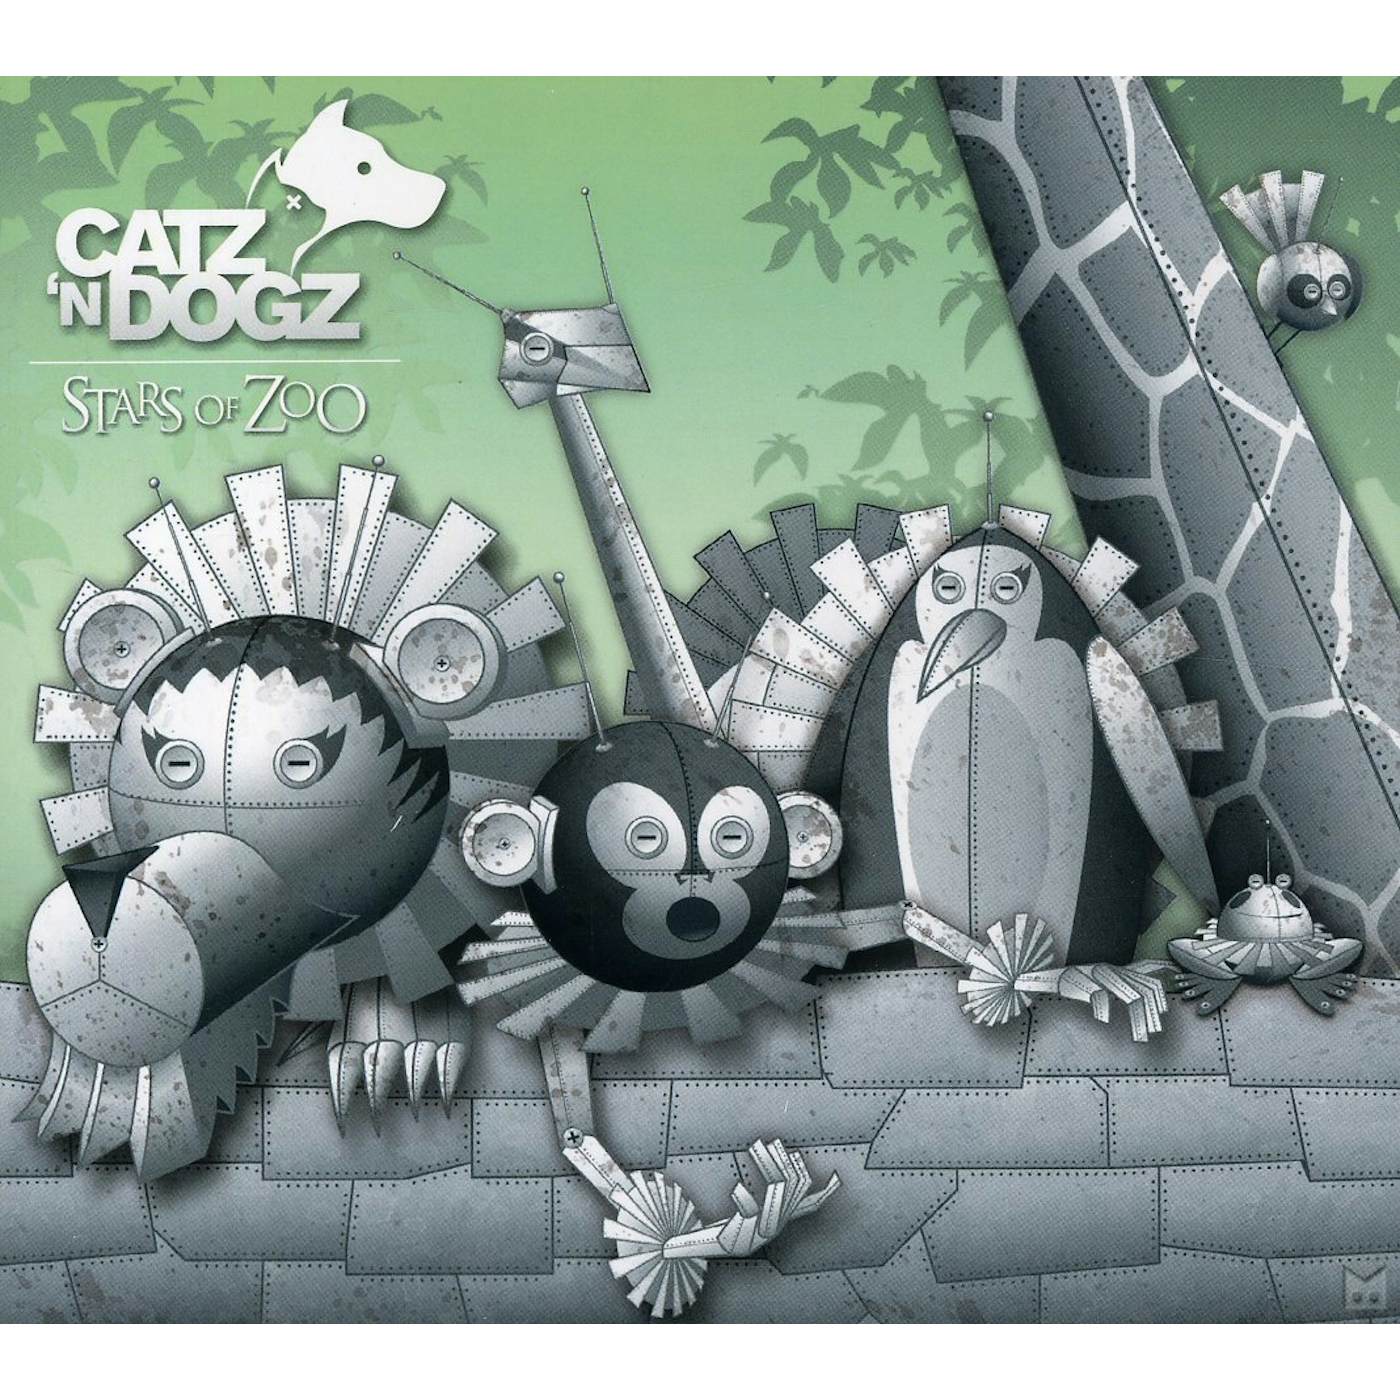 Catz 'n Dogz STARS OF ZOO CD